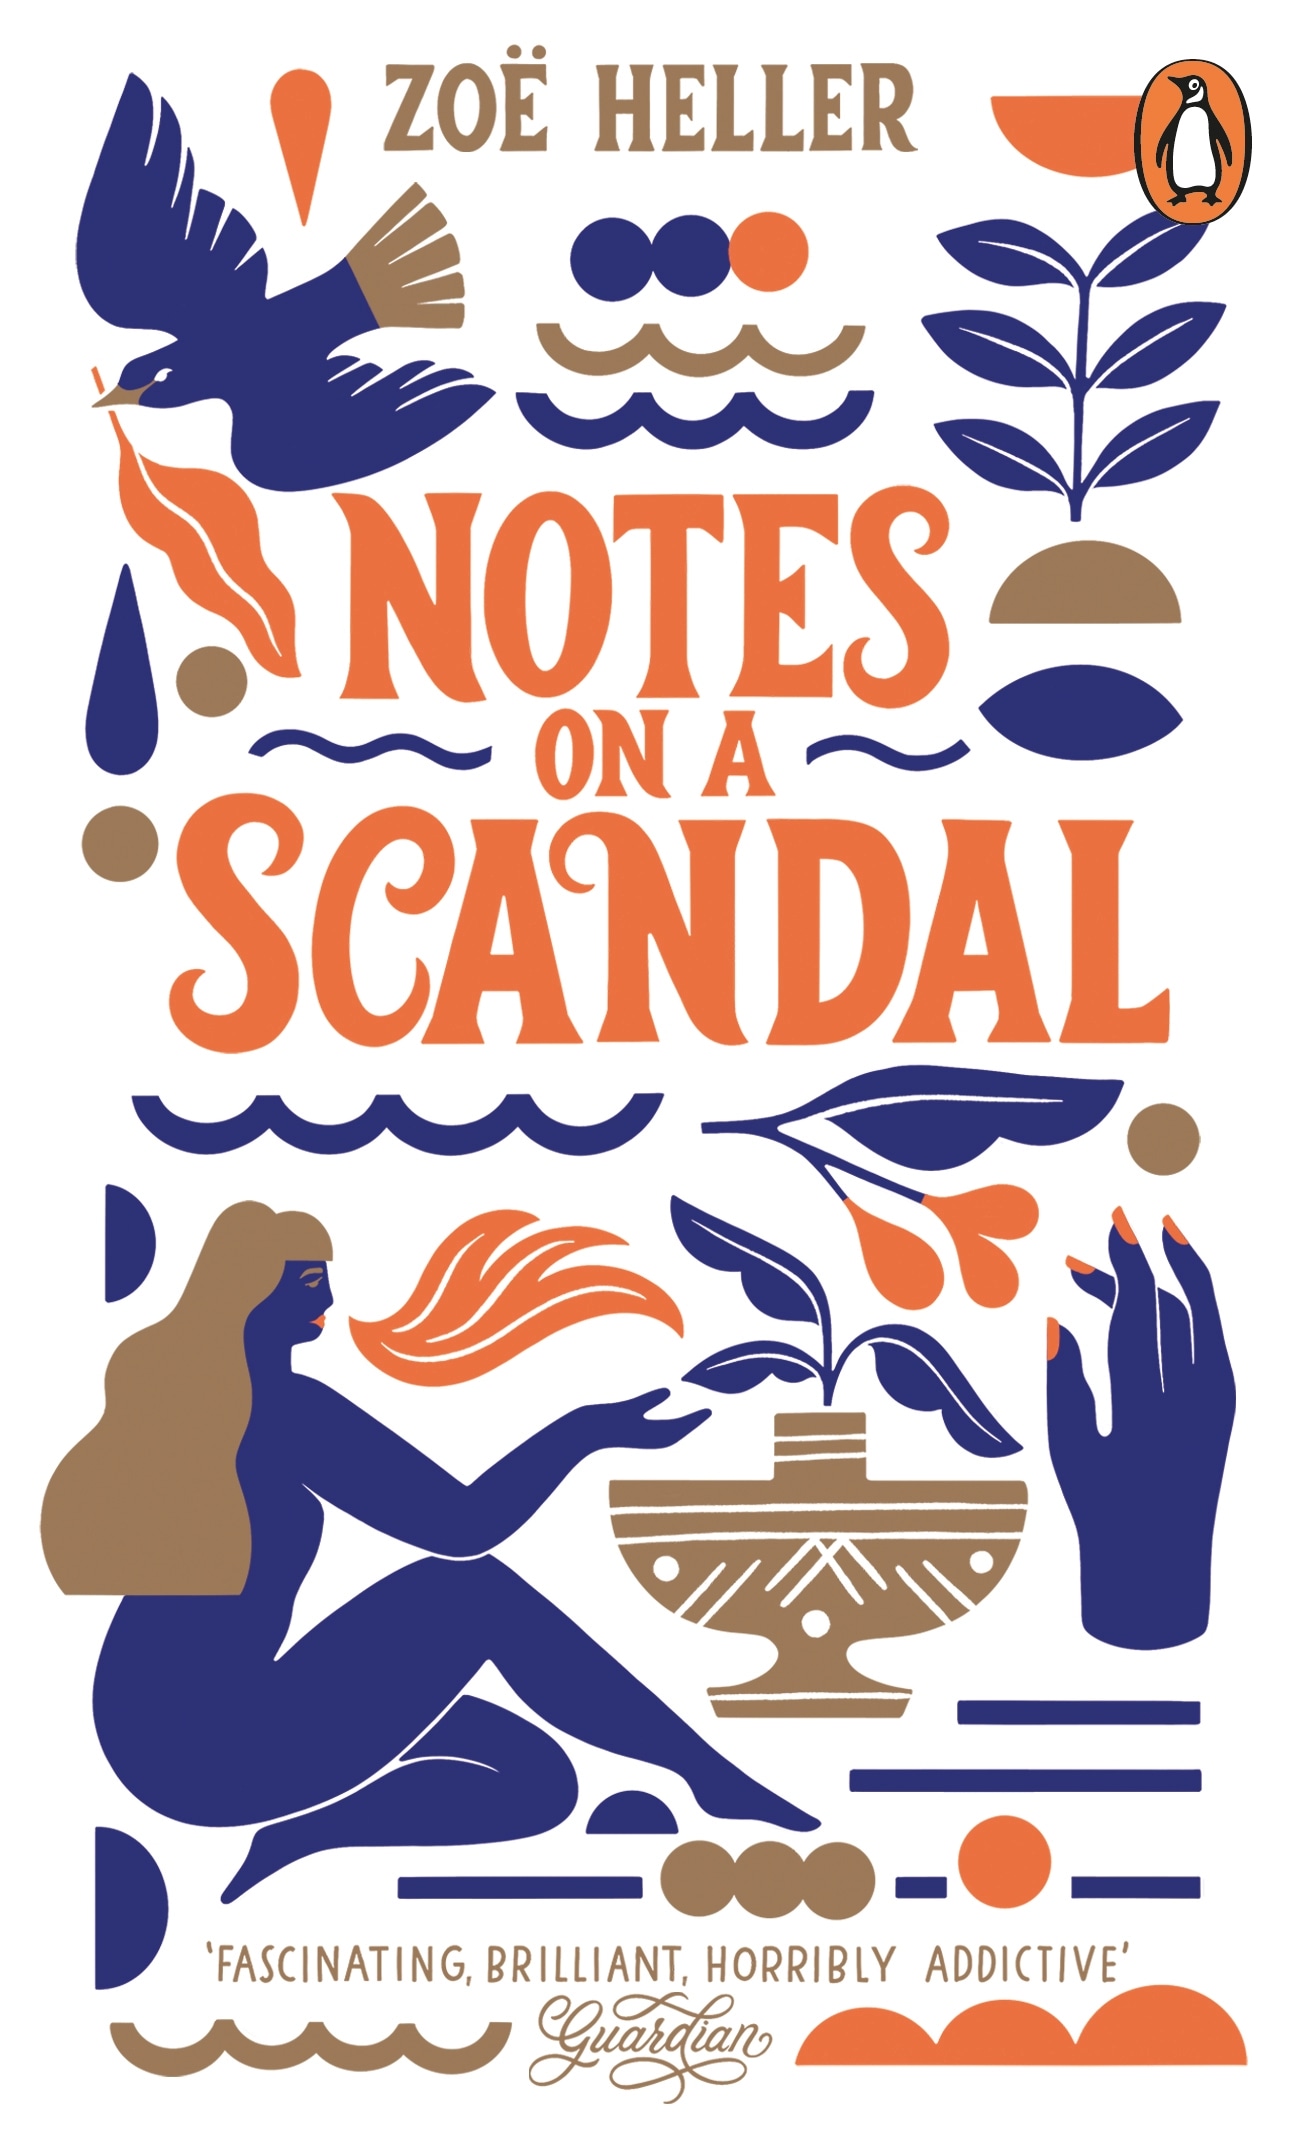 Book “Notes on a Scandal” by Zoë Heller — July 23, 2020